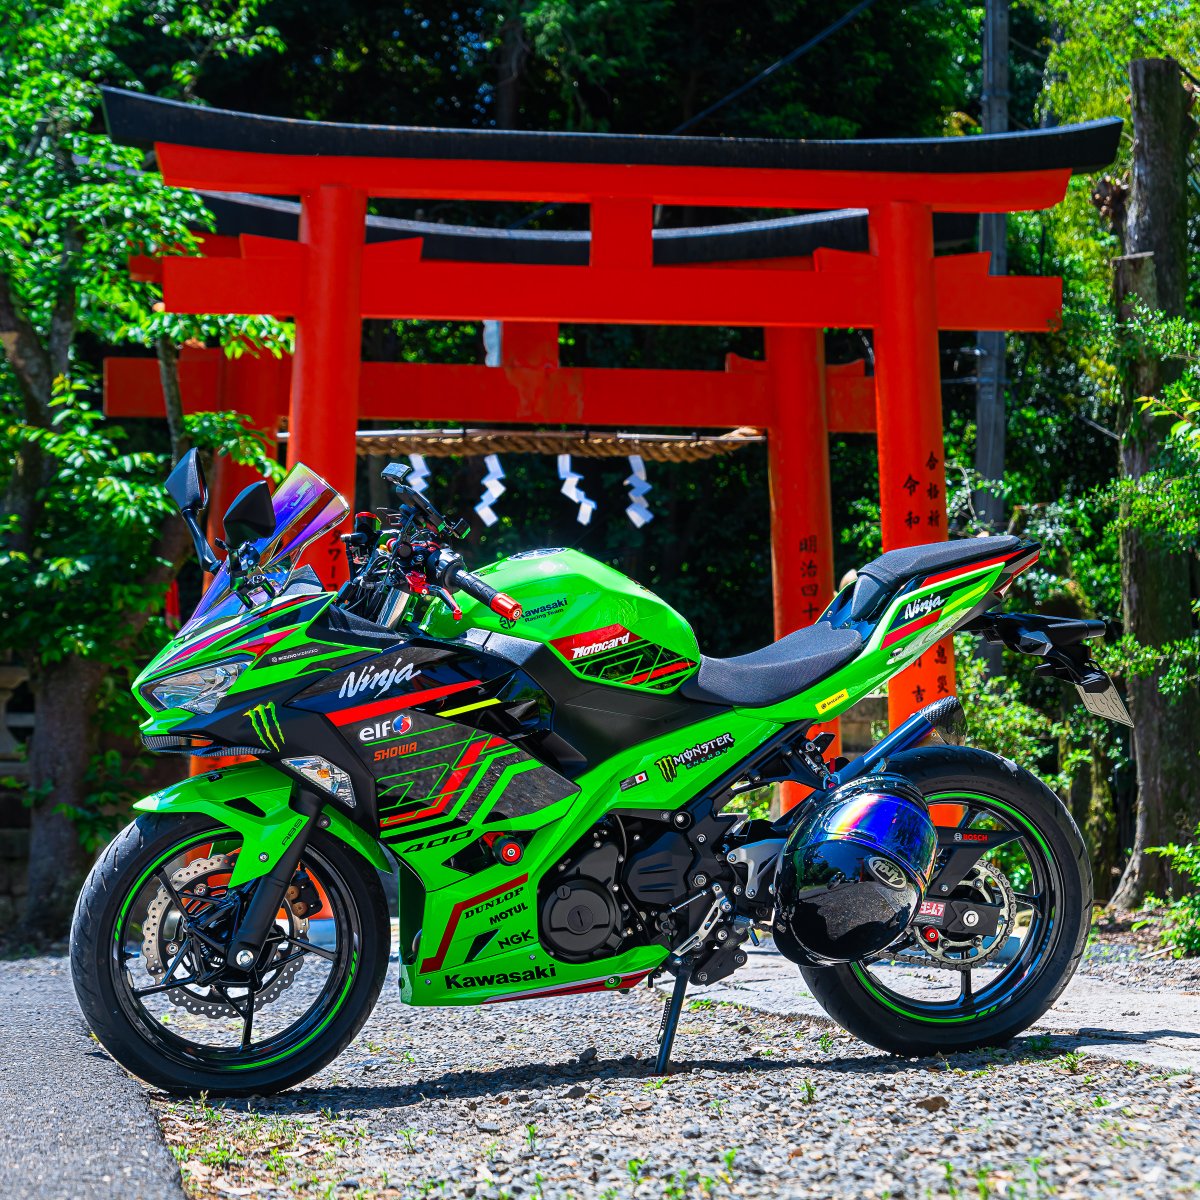 🏍️ Early May. 2024

鳥居と忍者は相性抜群

#Ninja400 #京都 #kyoto #Kawasaki #KRT  #バイクのある風景 #京都二輪旅 #ninja #バイクツーリング #バイク写真  #Japan #astrogx #kawasakininjalife #bikelife #lumix #S1R #motorcycle @kawasaki_motors_japan
@lumixjapan